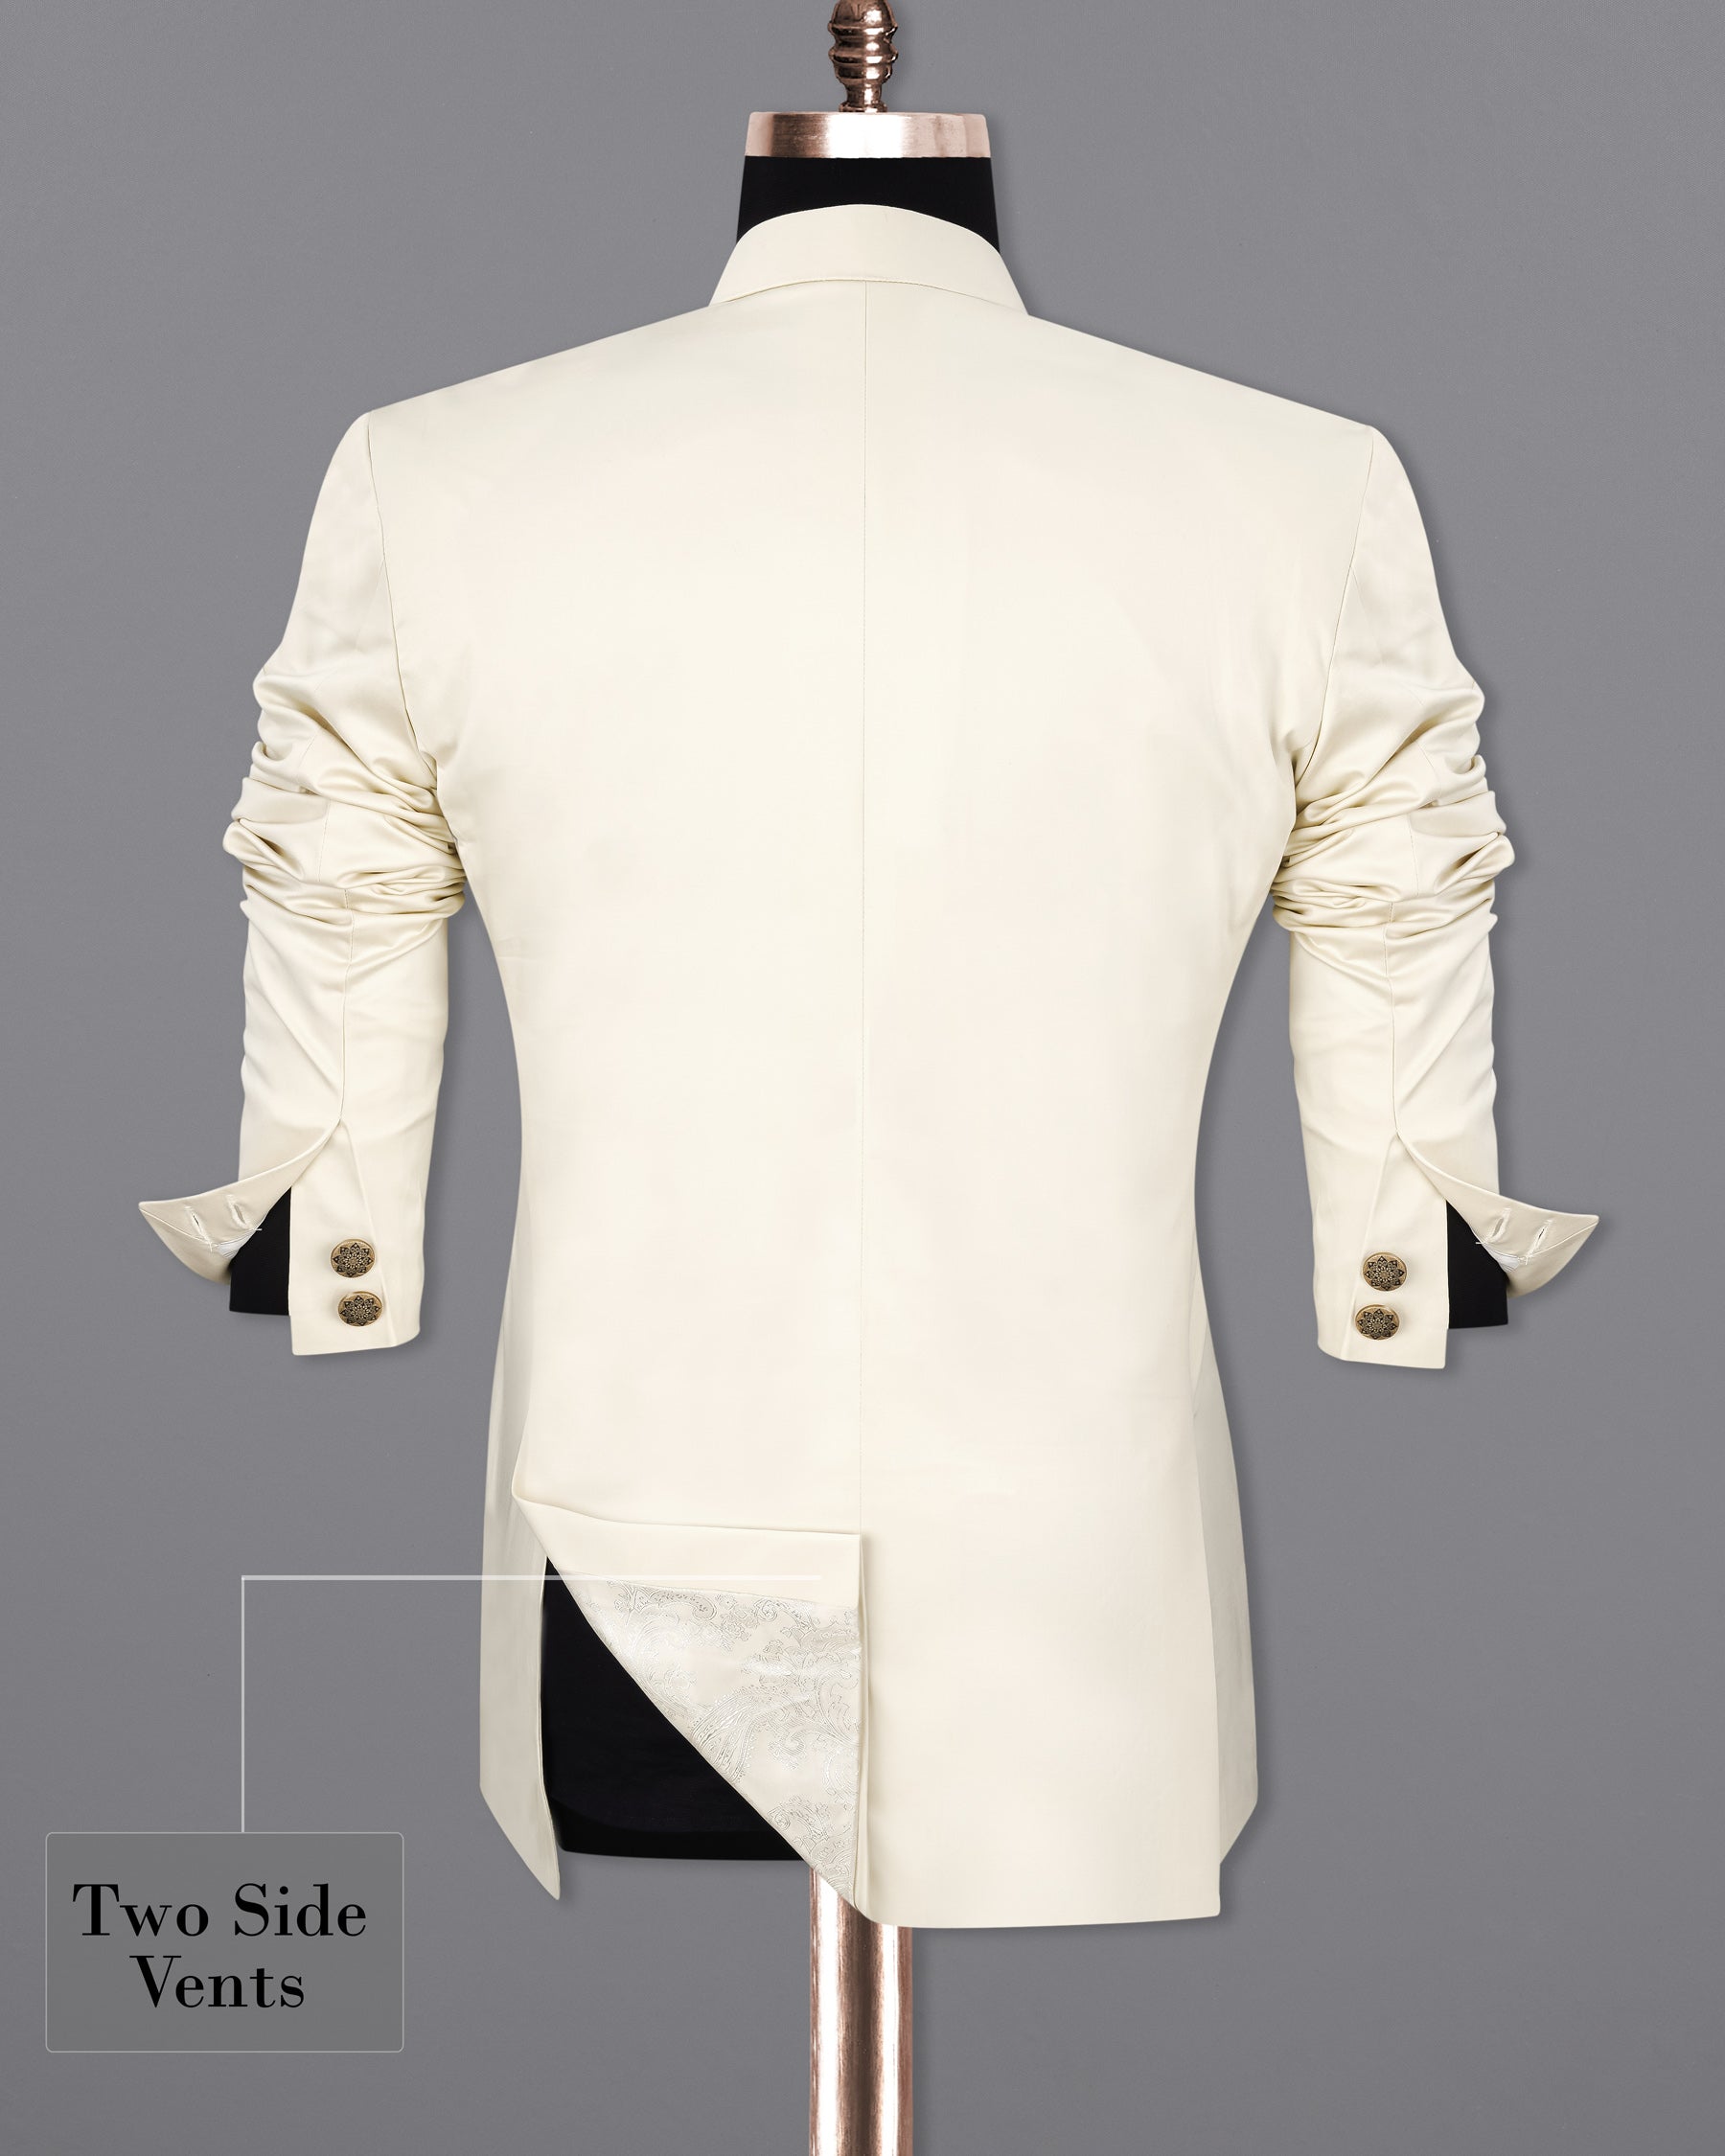 Meriono White Bandhgala Designer Sports Suit ST1862-BG-D41-36, ST1862-BG-D41-38, ST1862-BG-D41-40, ST1862-BG-D41-42, ST1862-BG-D41-44, ST1862-BG-D41-46, ST1862-BG-D41-48, ST1862-BG-D41-50, ST1862-BG-D41-52, ST1862-BG-D41-54, ST1862-BG-D41-56, ST1862-BG-D41-58, ST1862-BG-D41-60